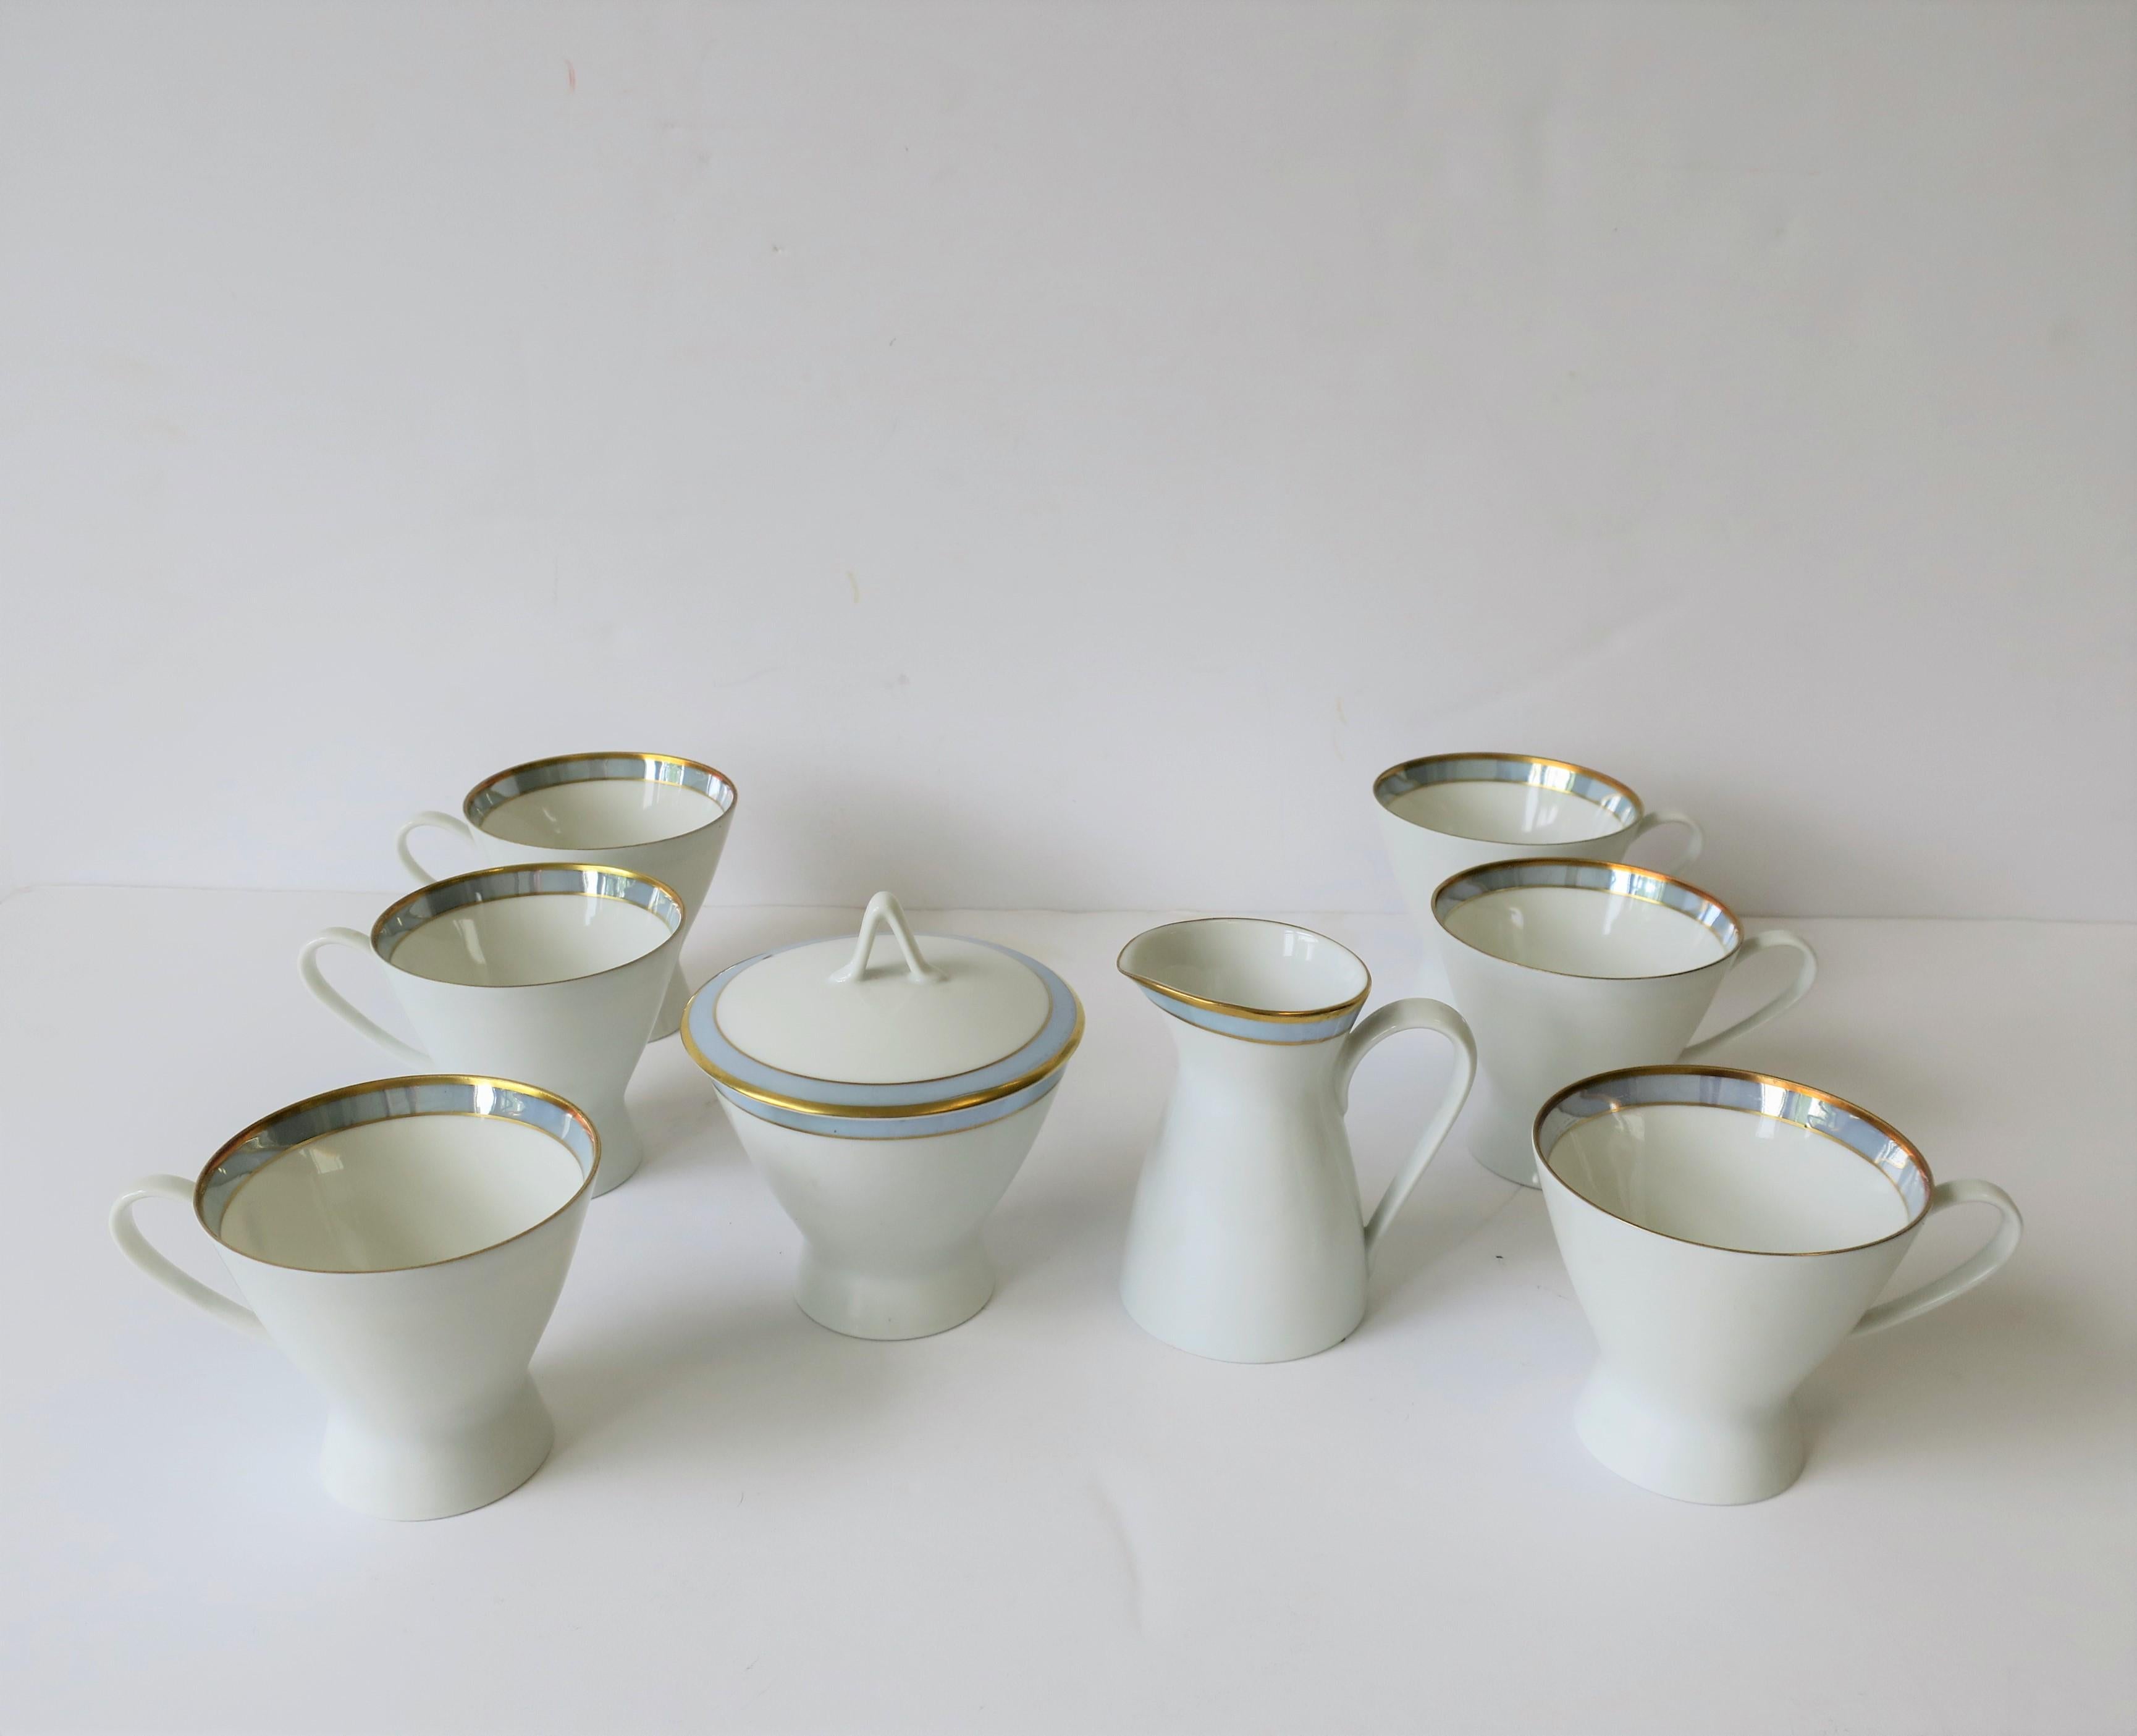 chanel tea cup set